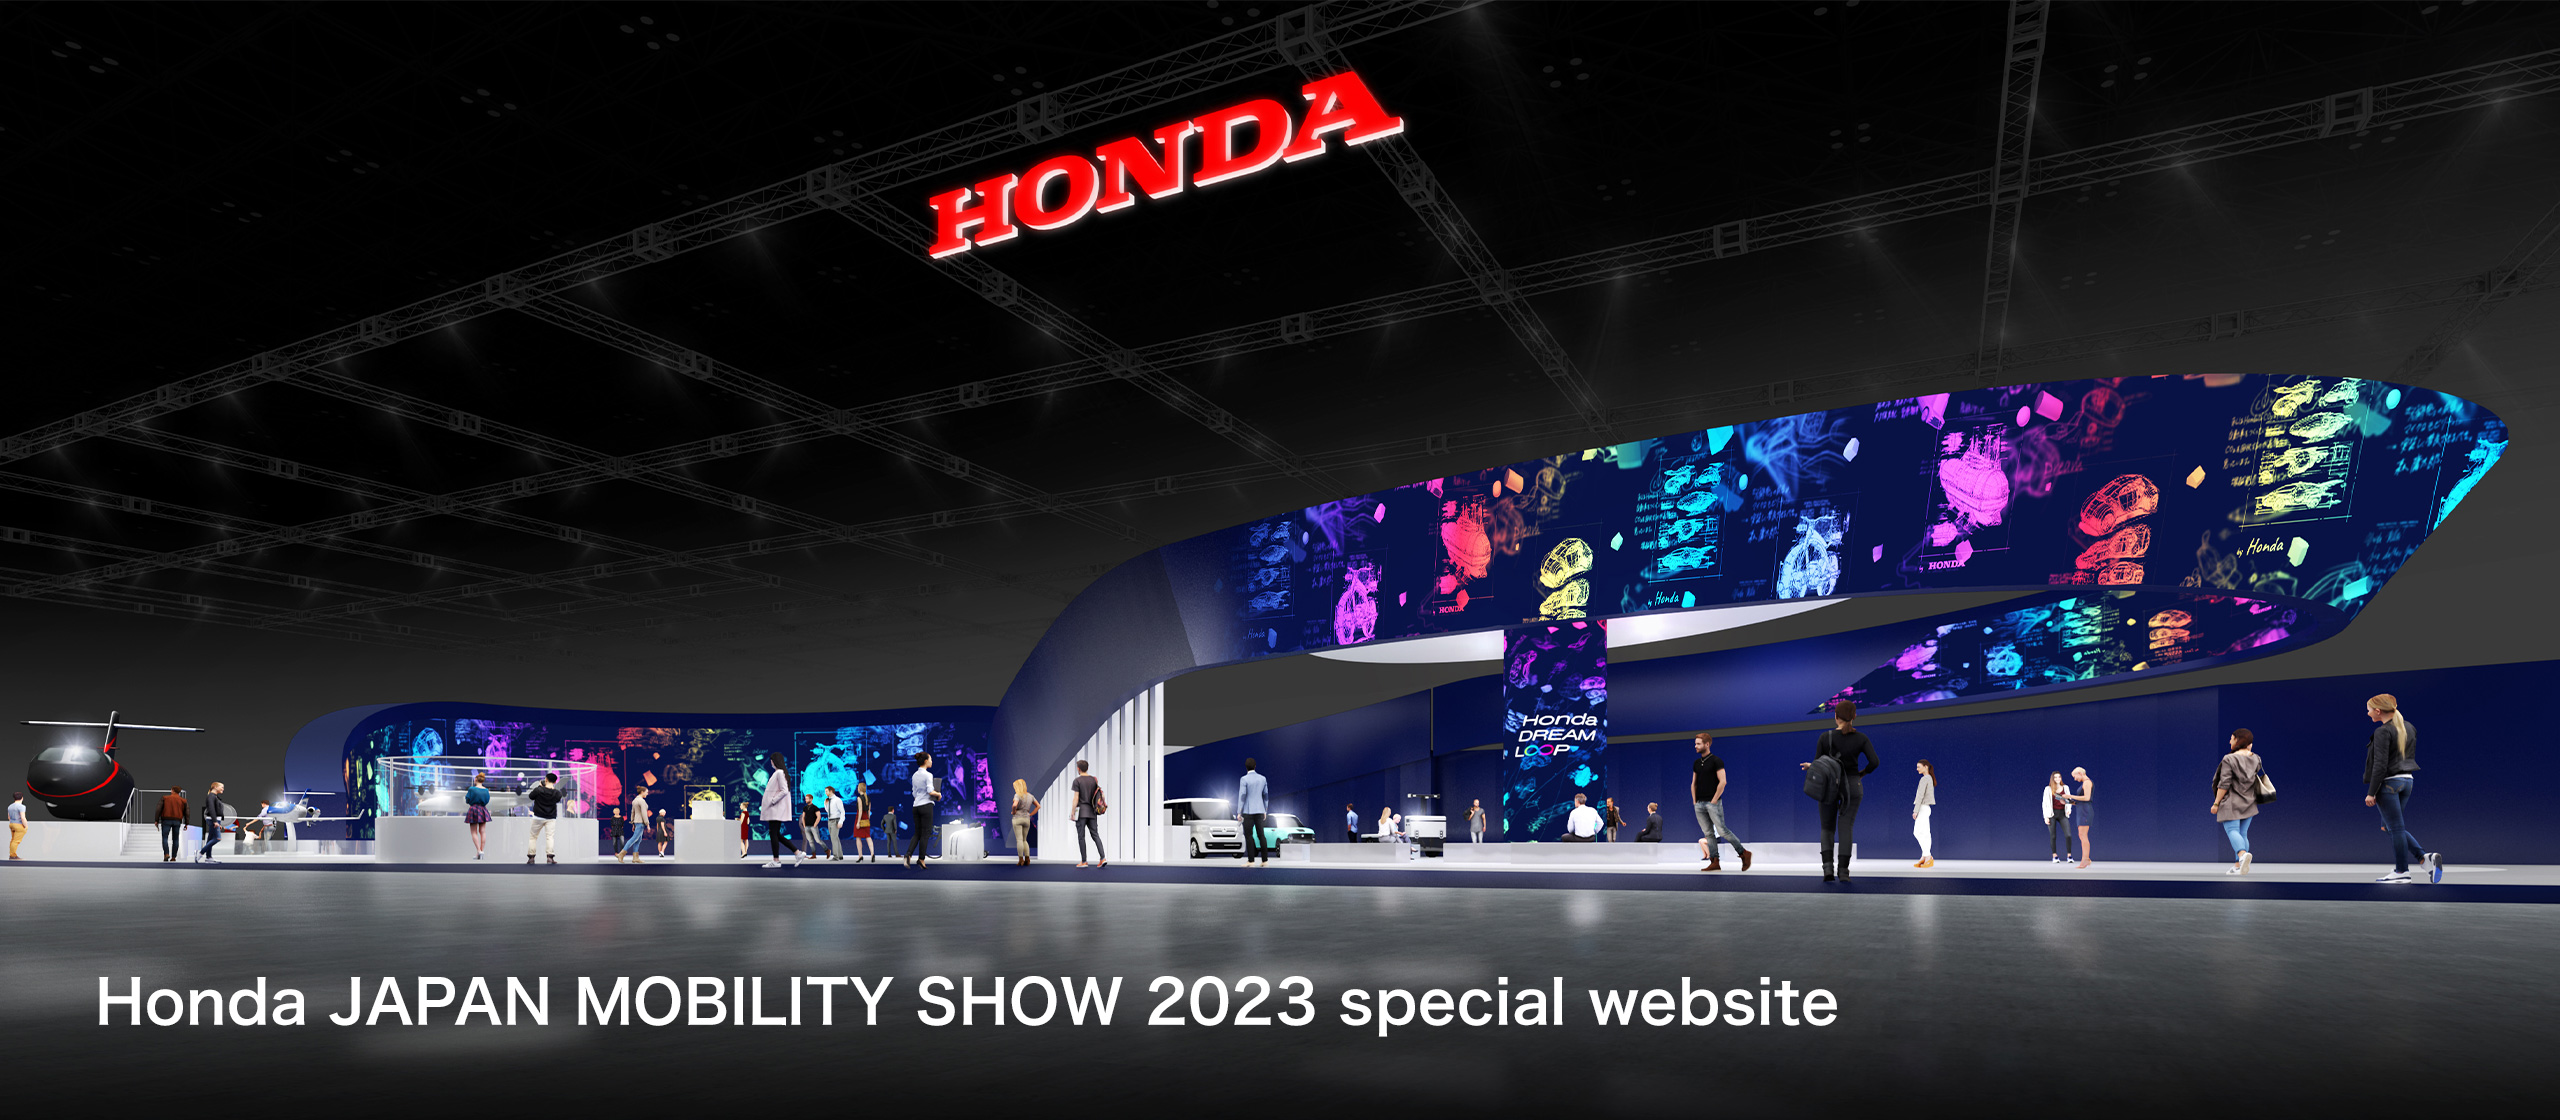 Honda JAPAN MOBILITY SHOW 2023 special website opened